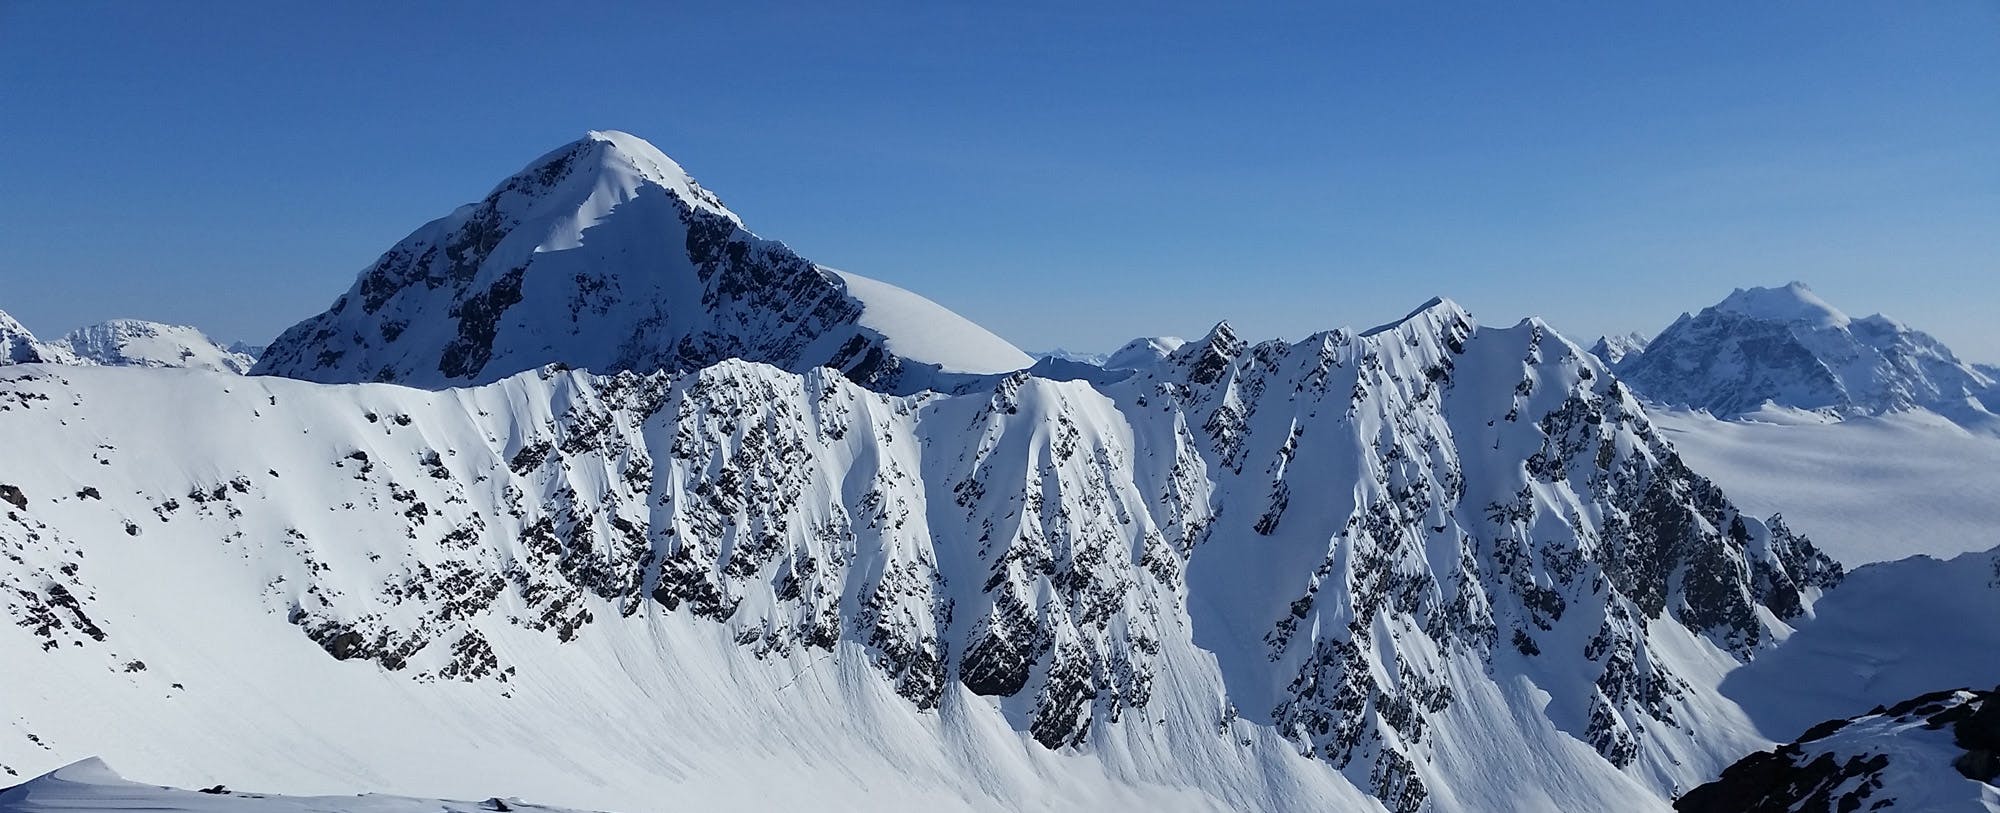 Peter Wentz Interview: A Big Mountain Skier’s First Trip to Alaska